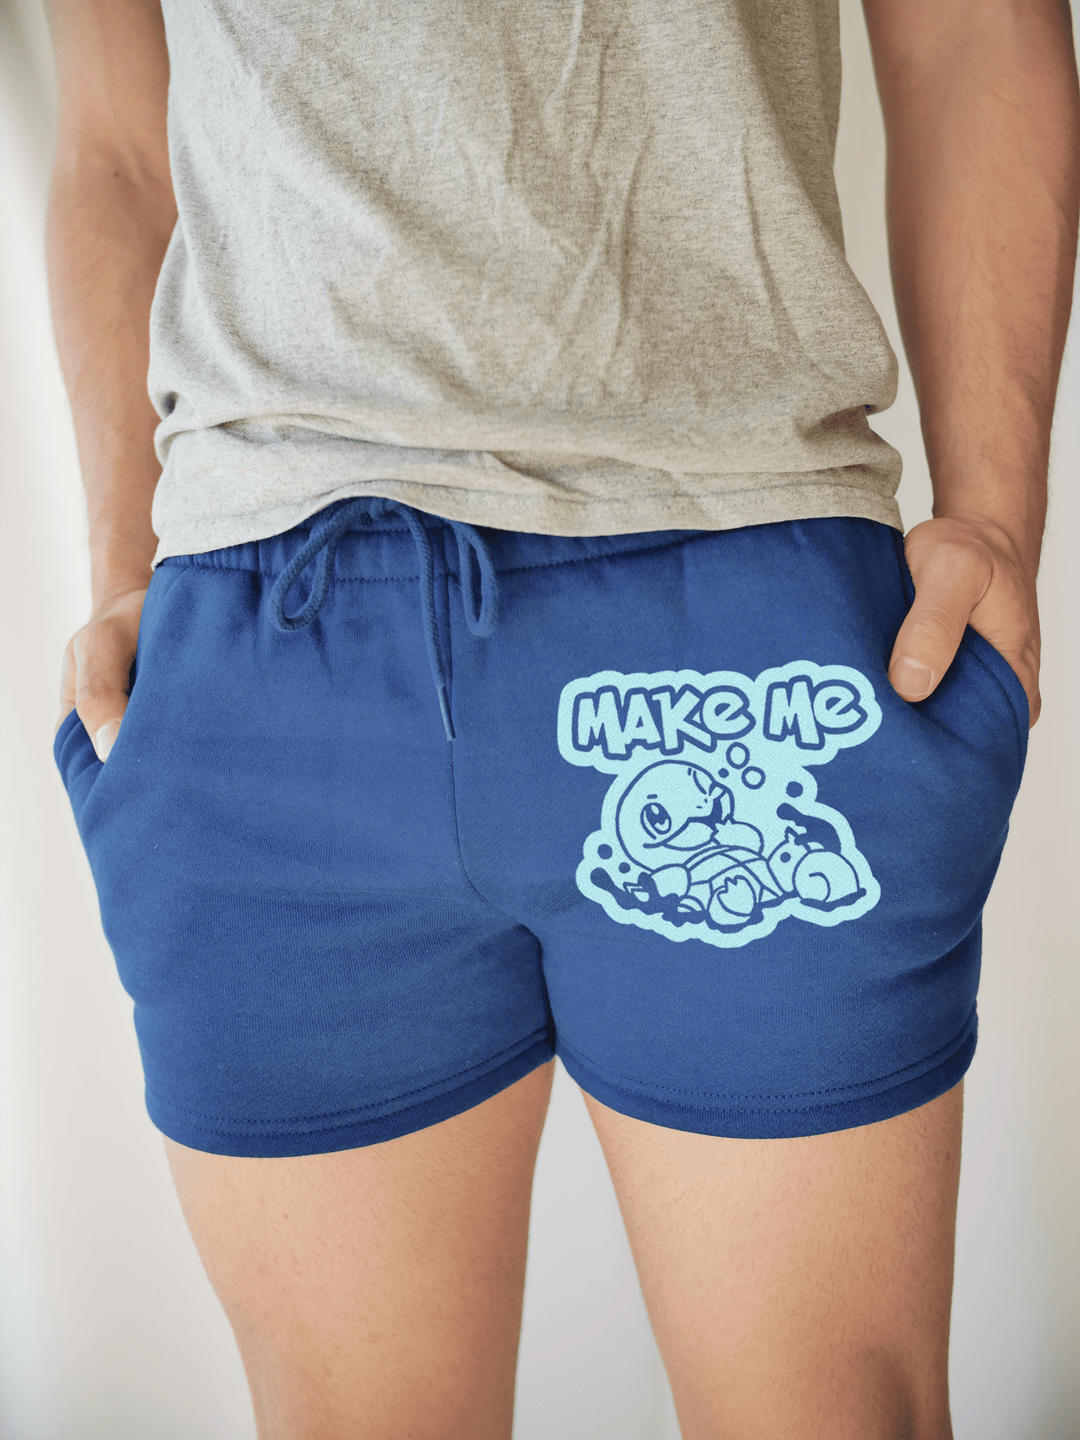 PixelThat Punderwear Shorts Royal Blue / S / Front Make Me Squirtle Men's Gym Shorts